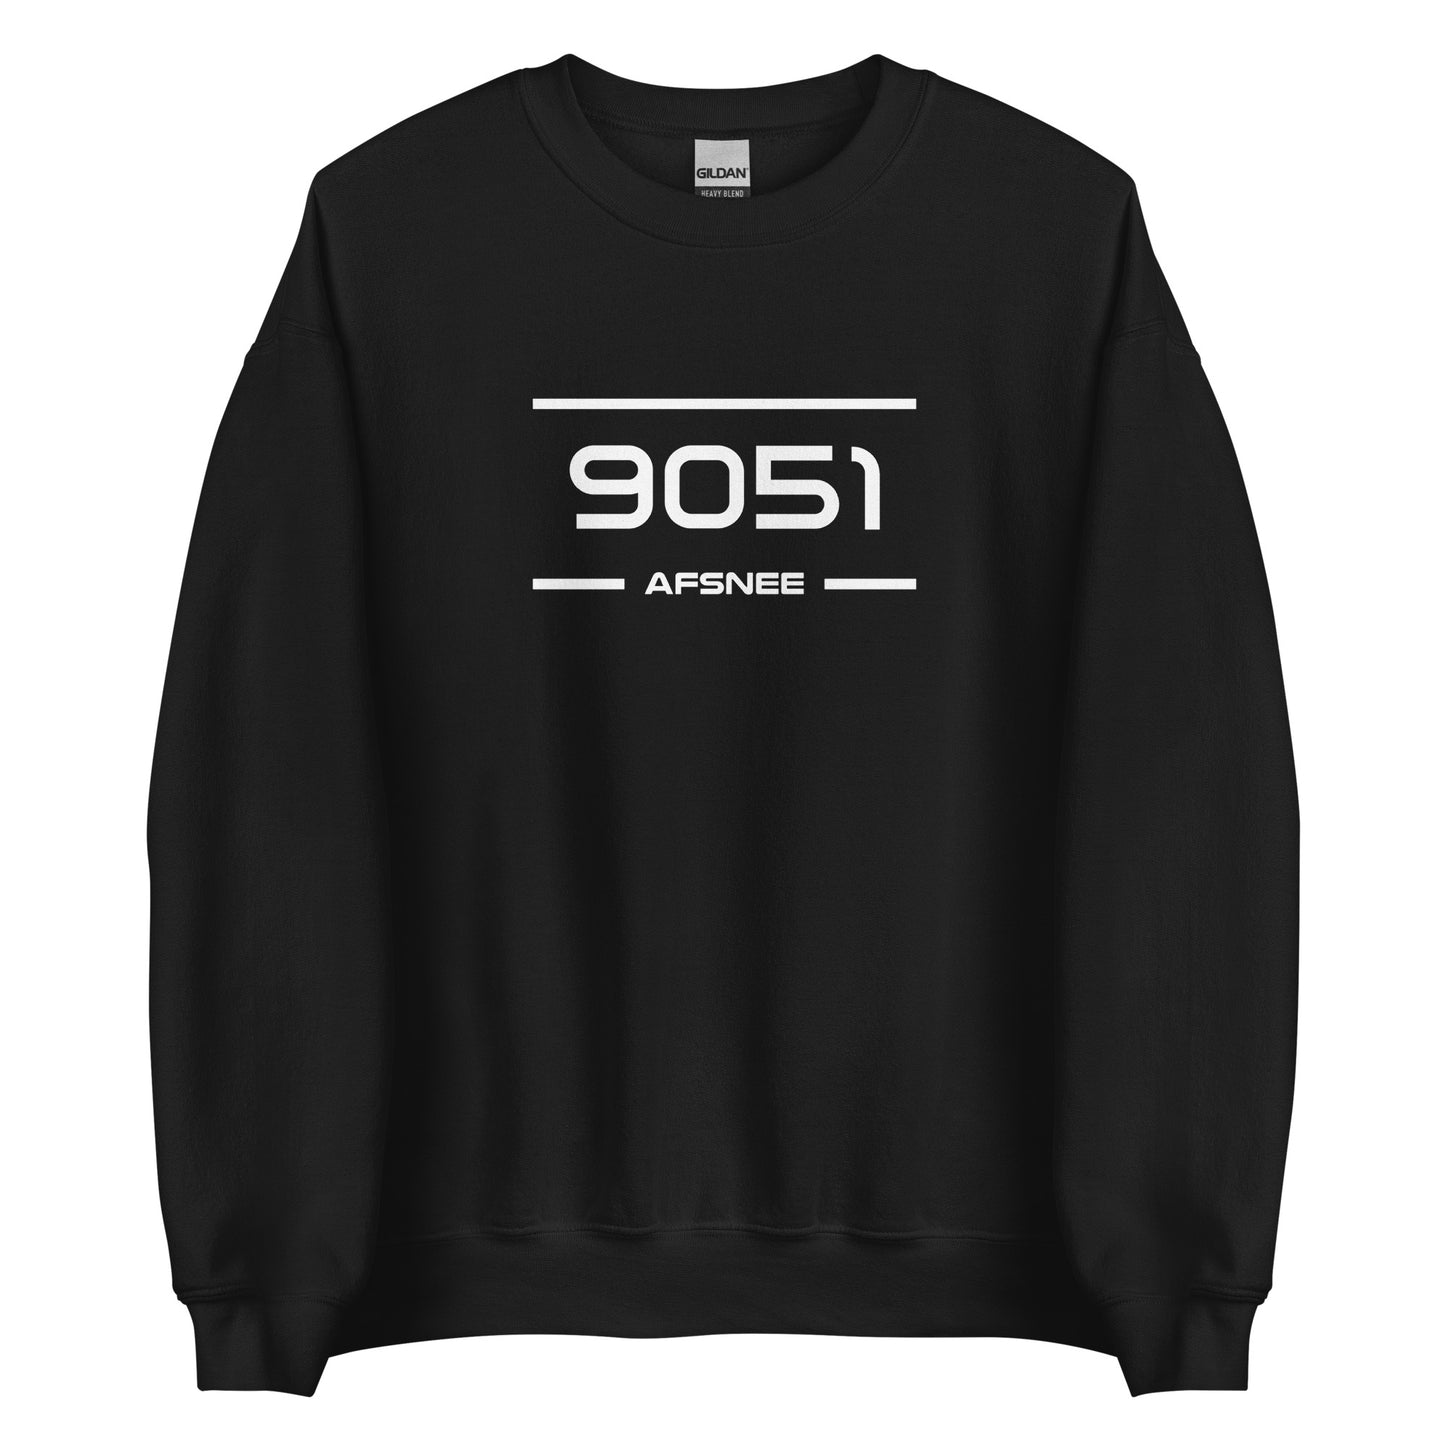 Sweater - 9051 - Afsnee (M/V)